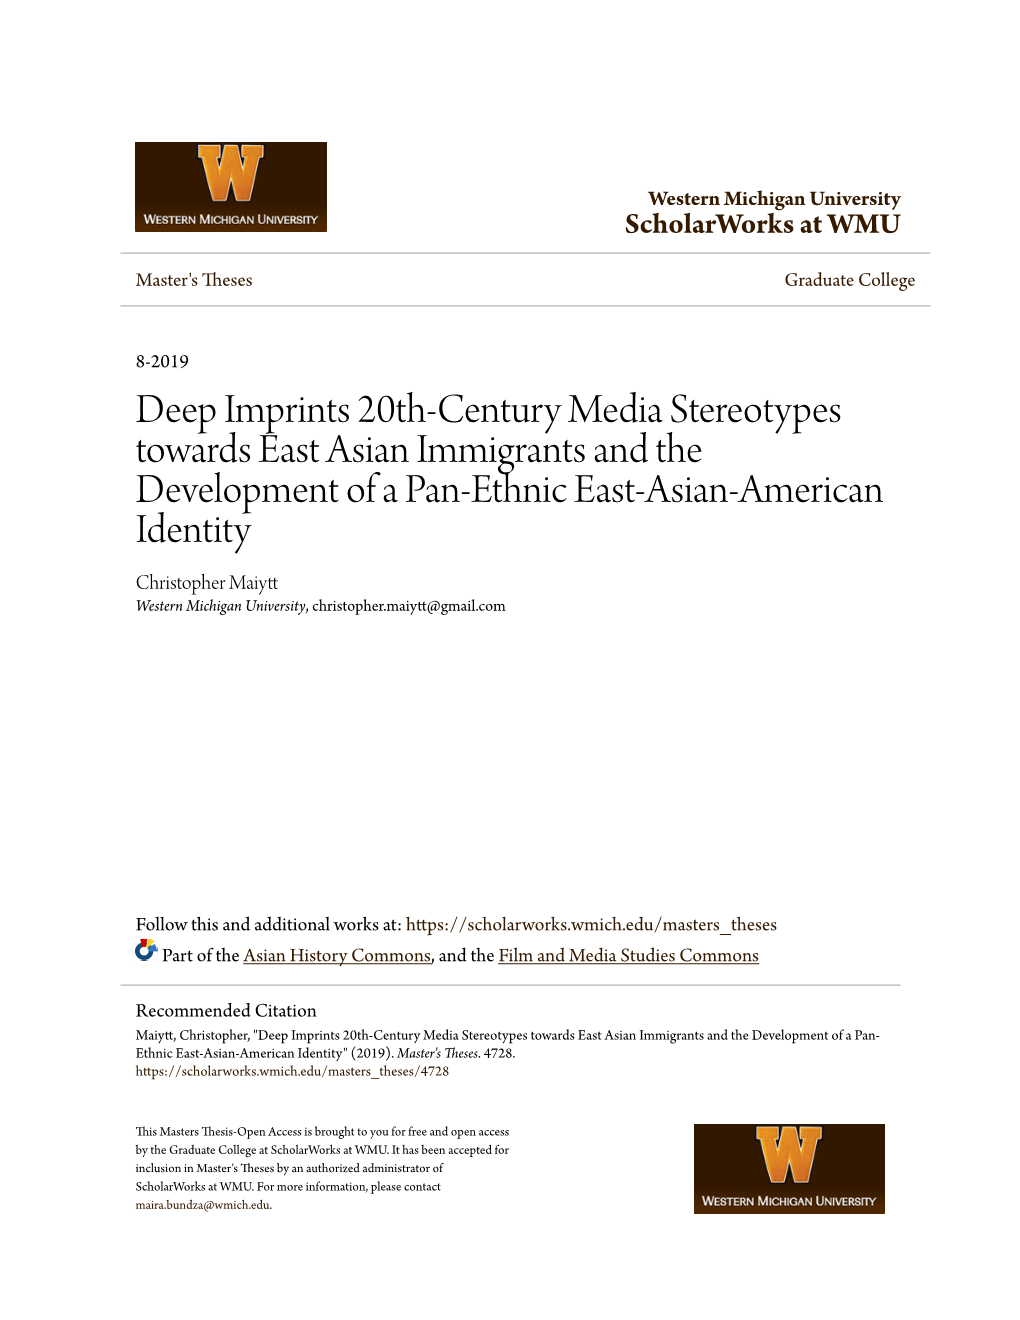 Deep Imprints 20Th-Century Media Stereotypes Towards East Asian